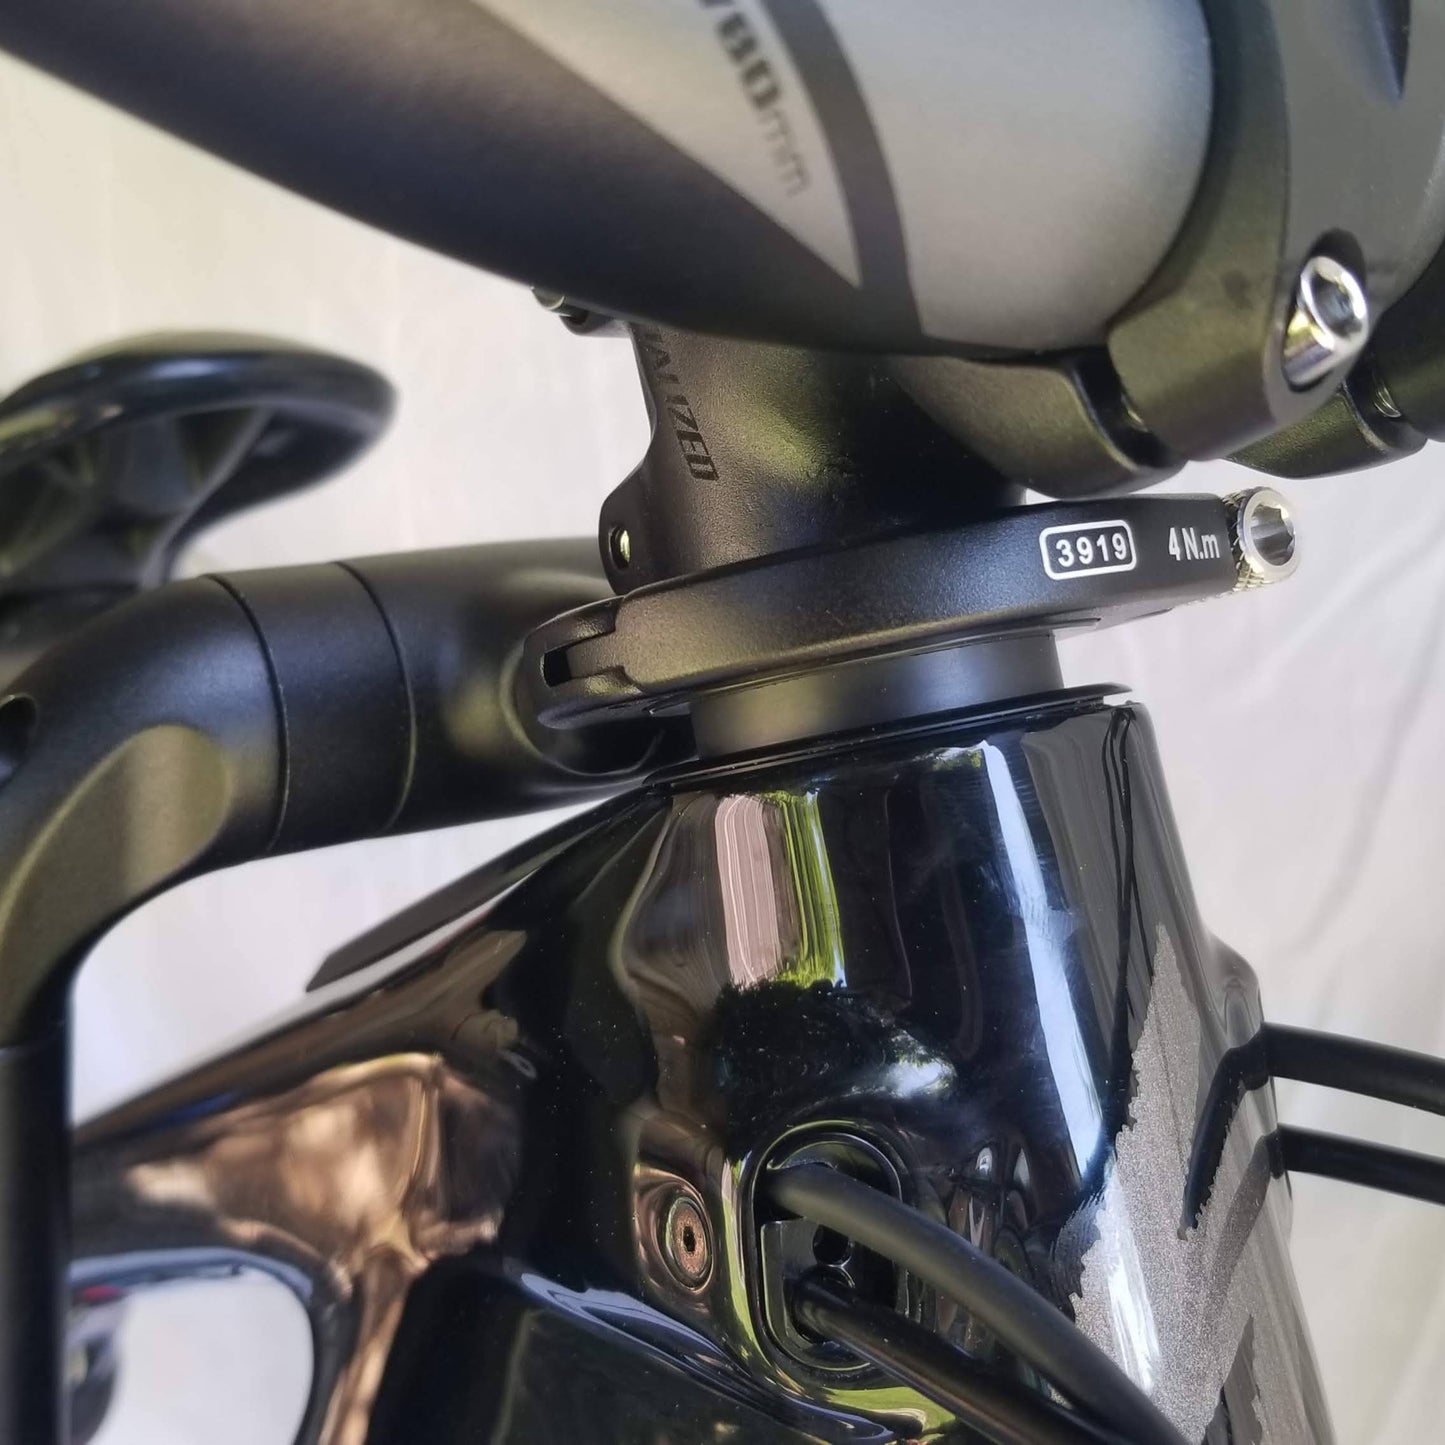 E-Bike Adapter